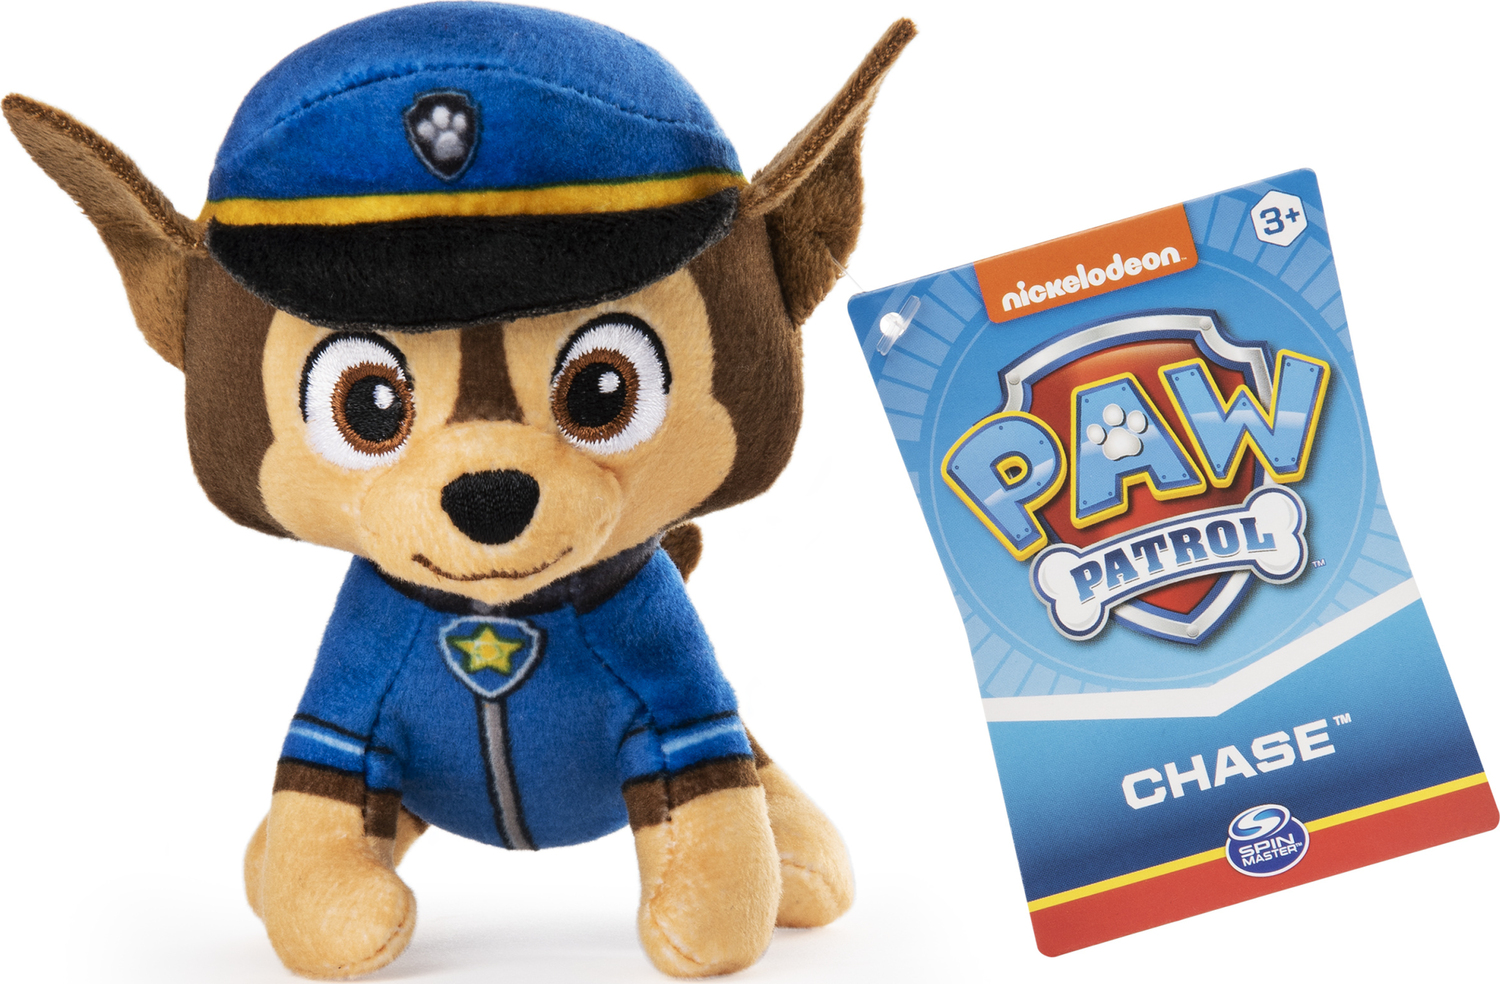 PAW Patrol toy vehicle